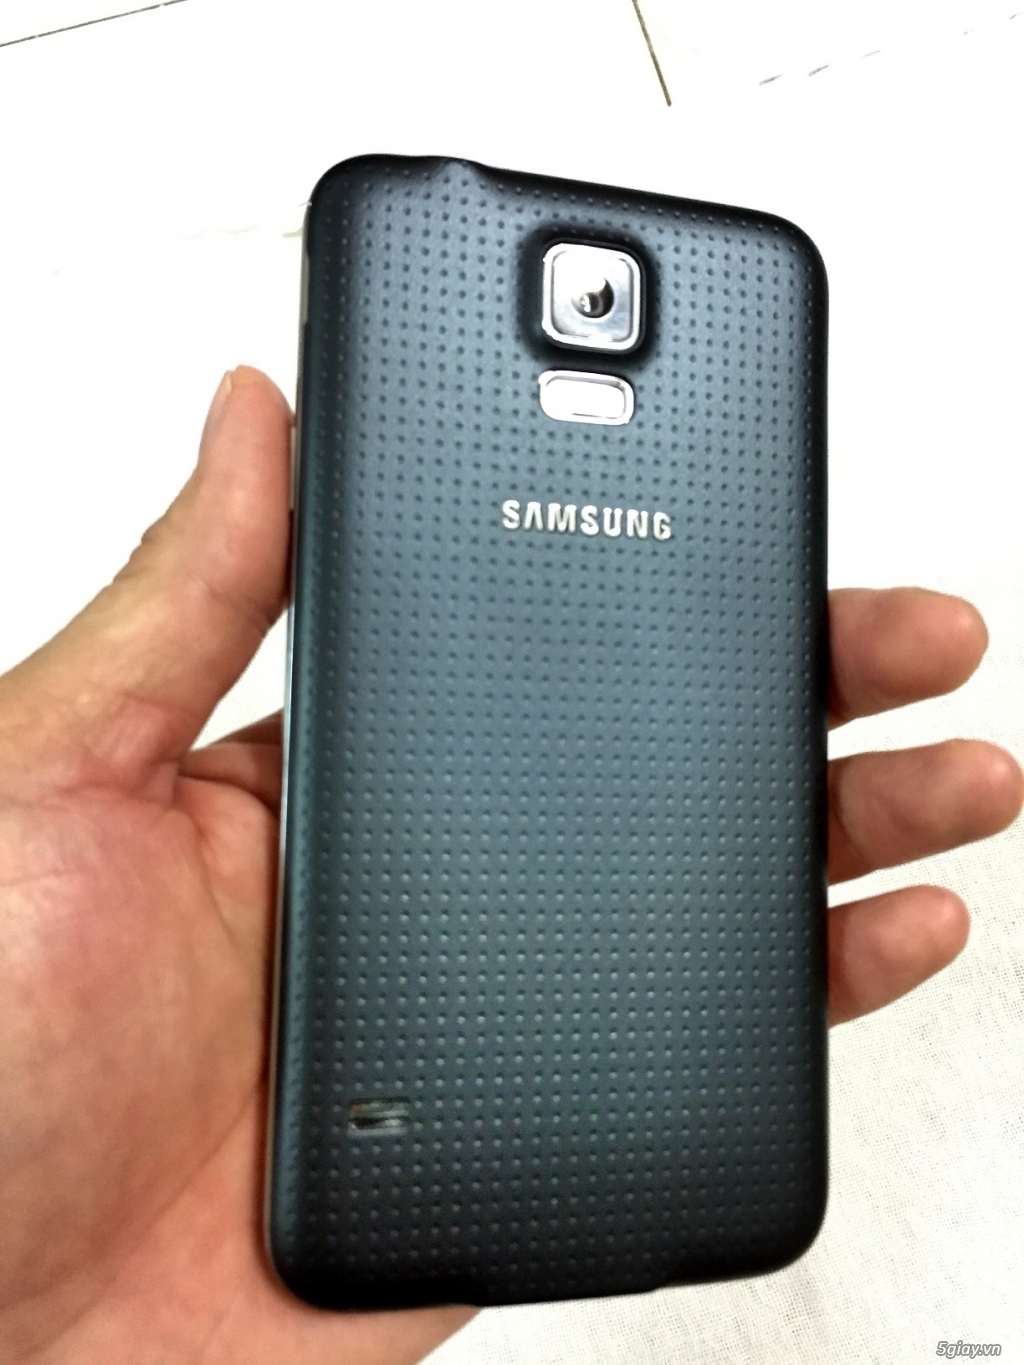 Samsung galaxy S5 Blach FullBox còn bảo hành 27/12/2015. SSVN - 10